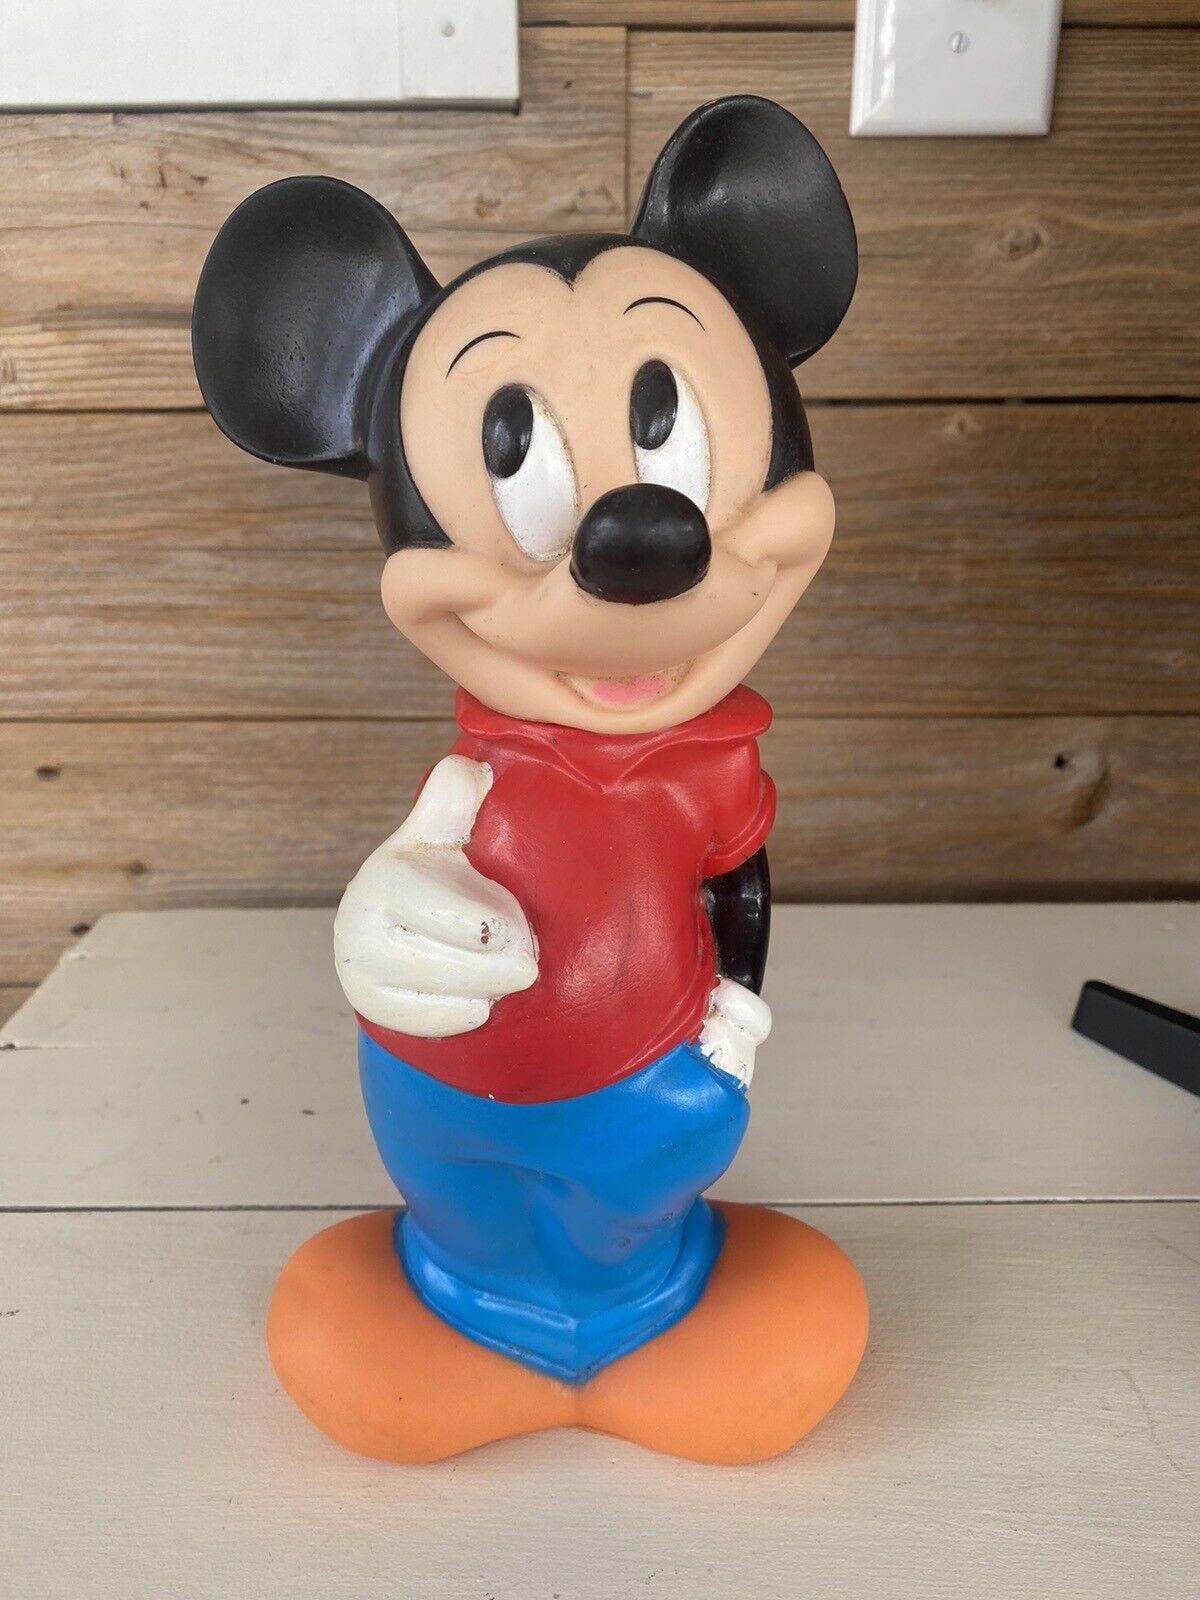 Vintage Disney Mickey Mouse Rubber Piggy Bank Illco Toys 1970